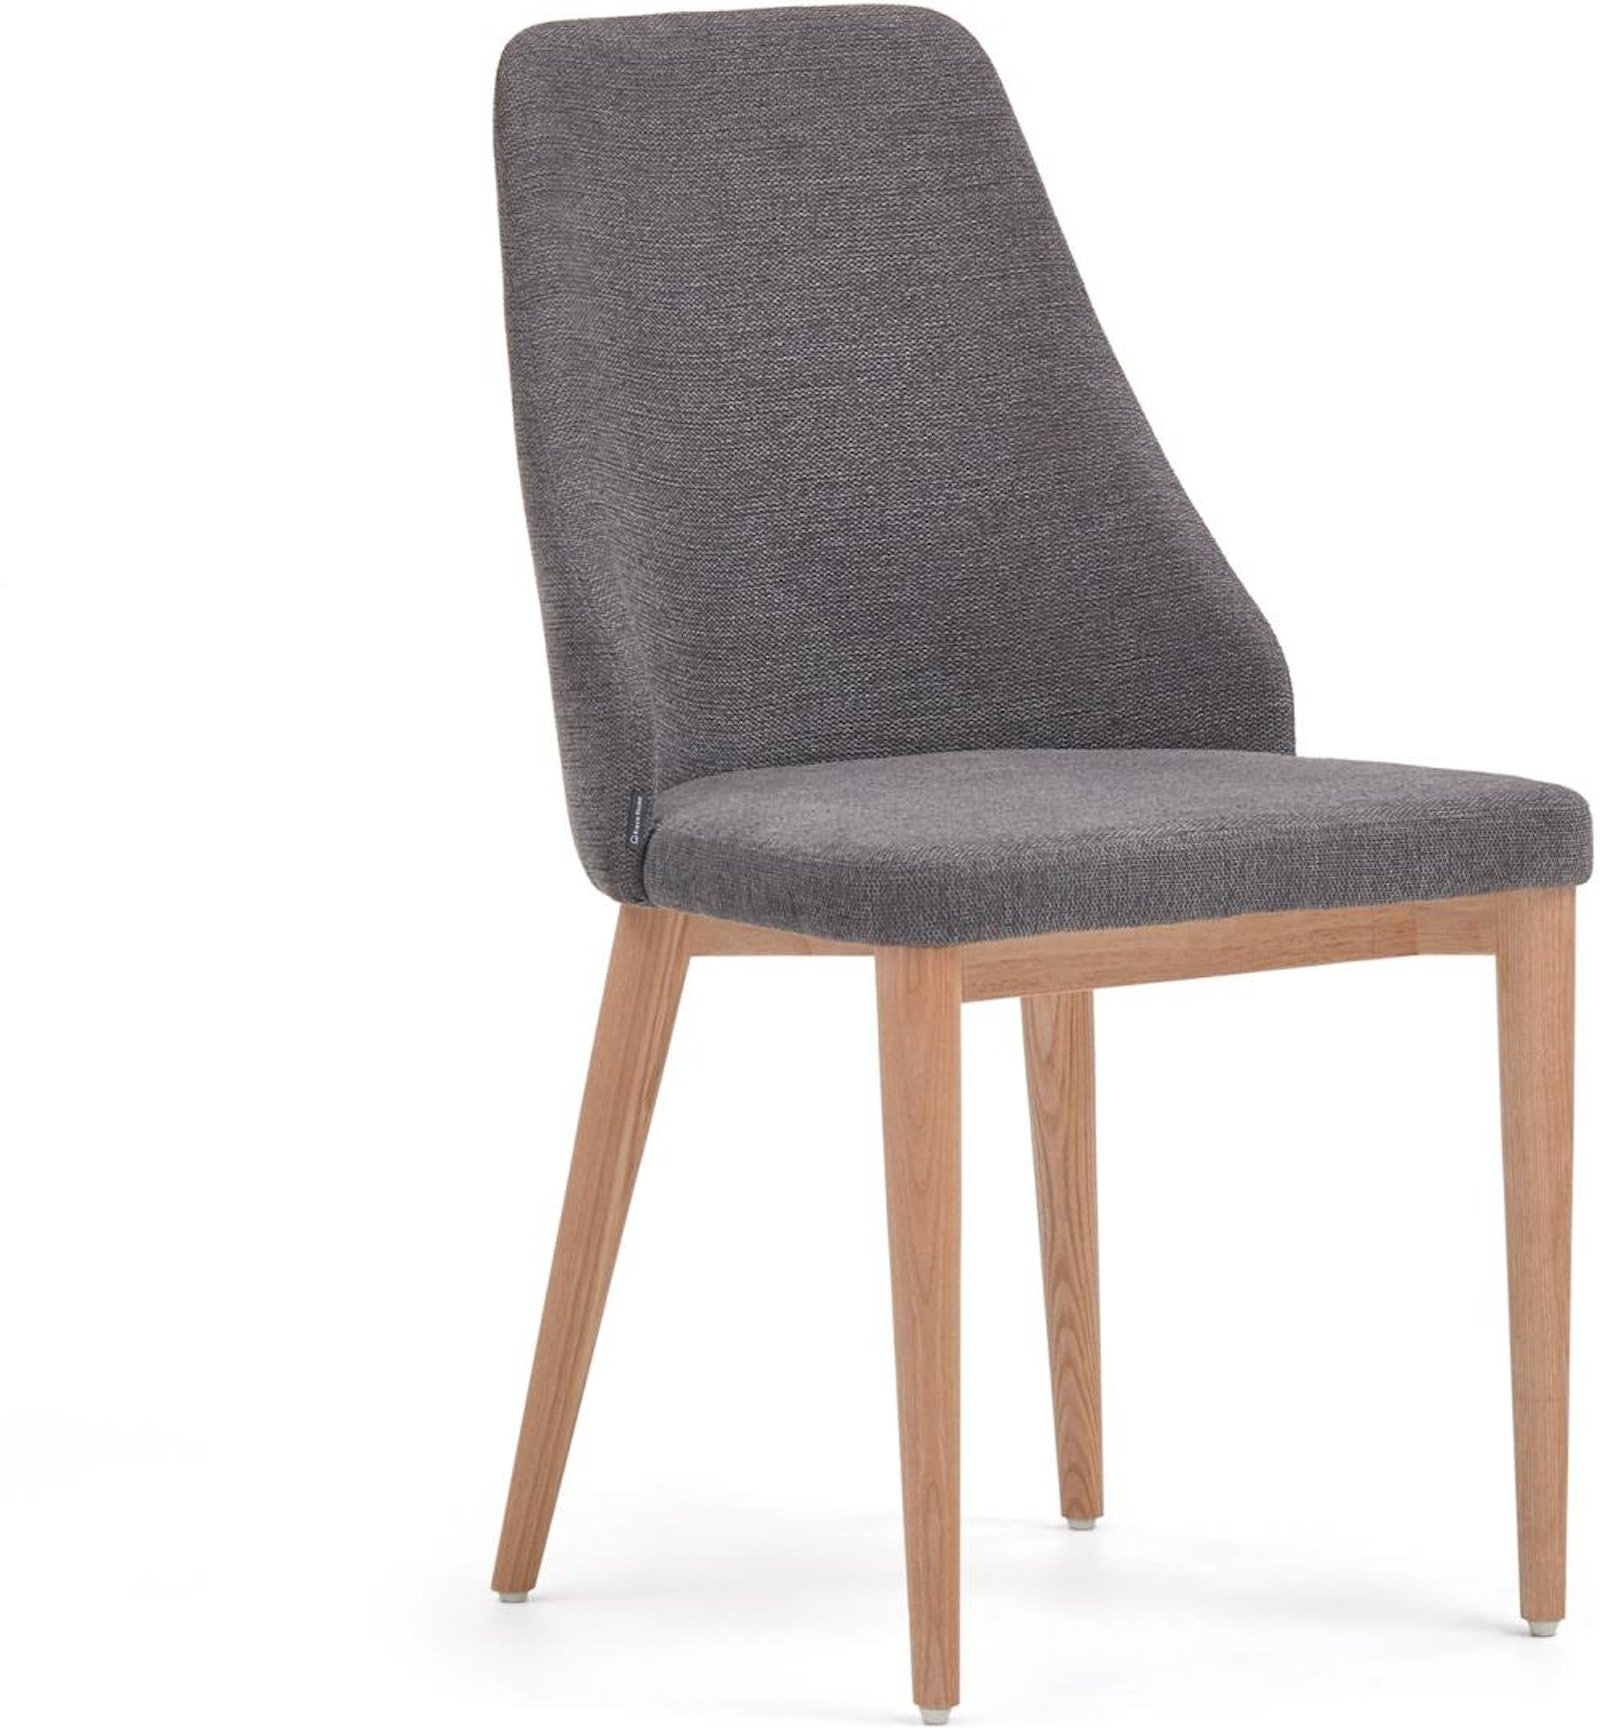 Rosie, Spisebordsstole, nordisk, moderne, rustik, stof by Laforma (H: 88 cm. x B: 48 cm. x L: 56 cm., Grå/Natur)